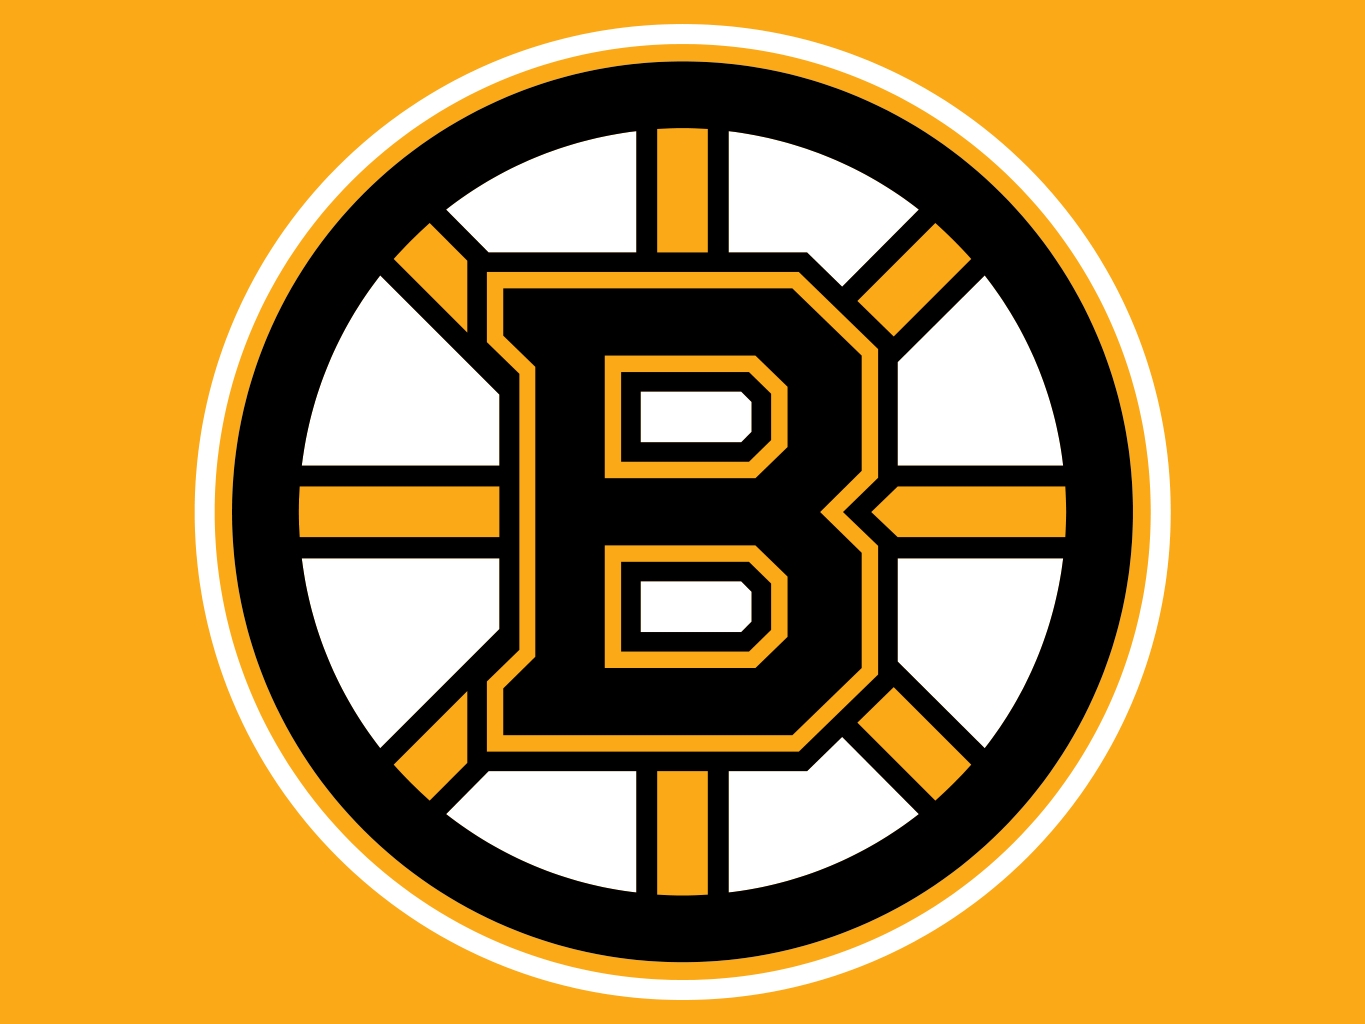 Bruins Go With O'Reilly And Neely/Bourque Era Bear For Winter Classic